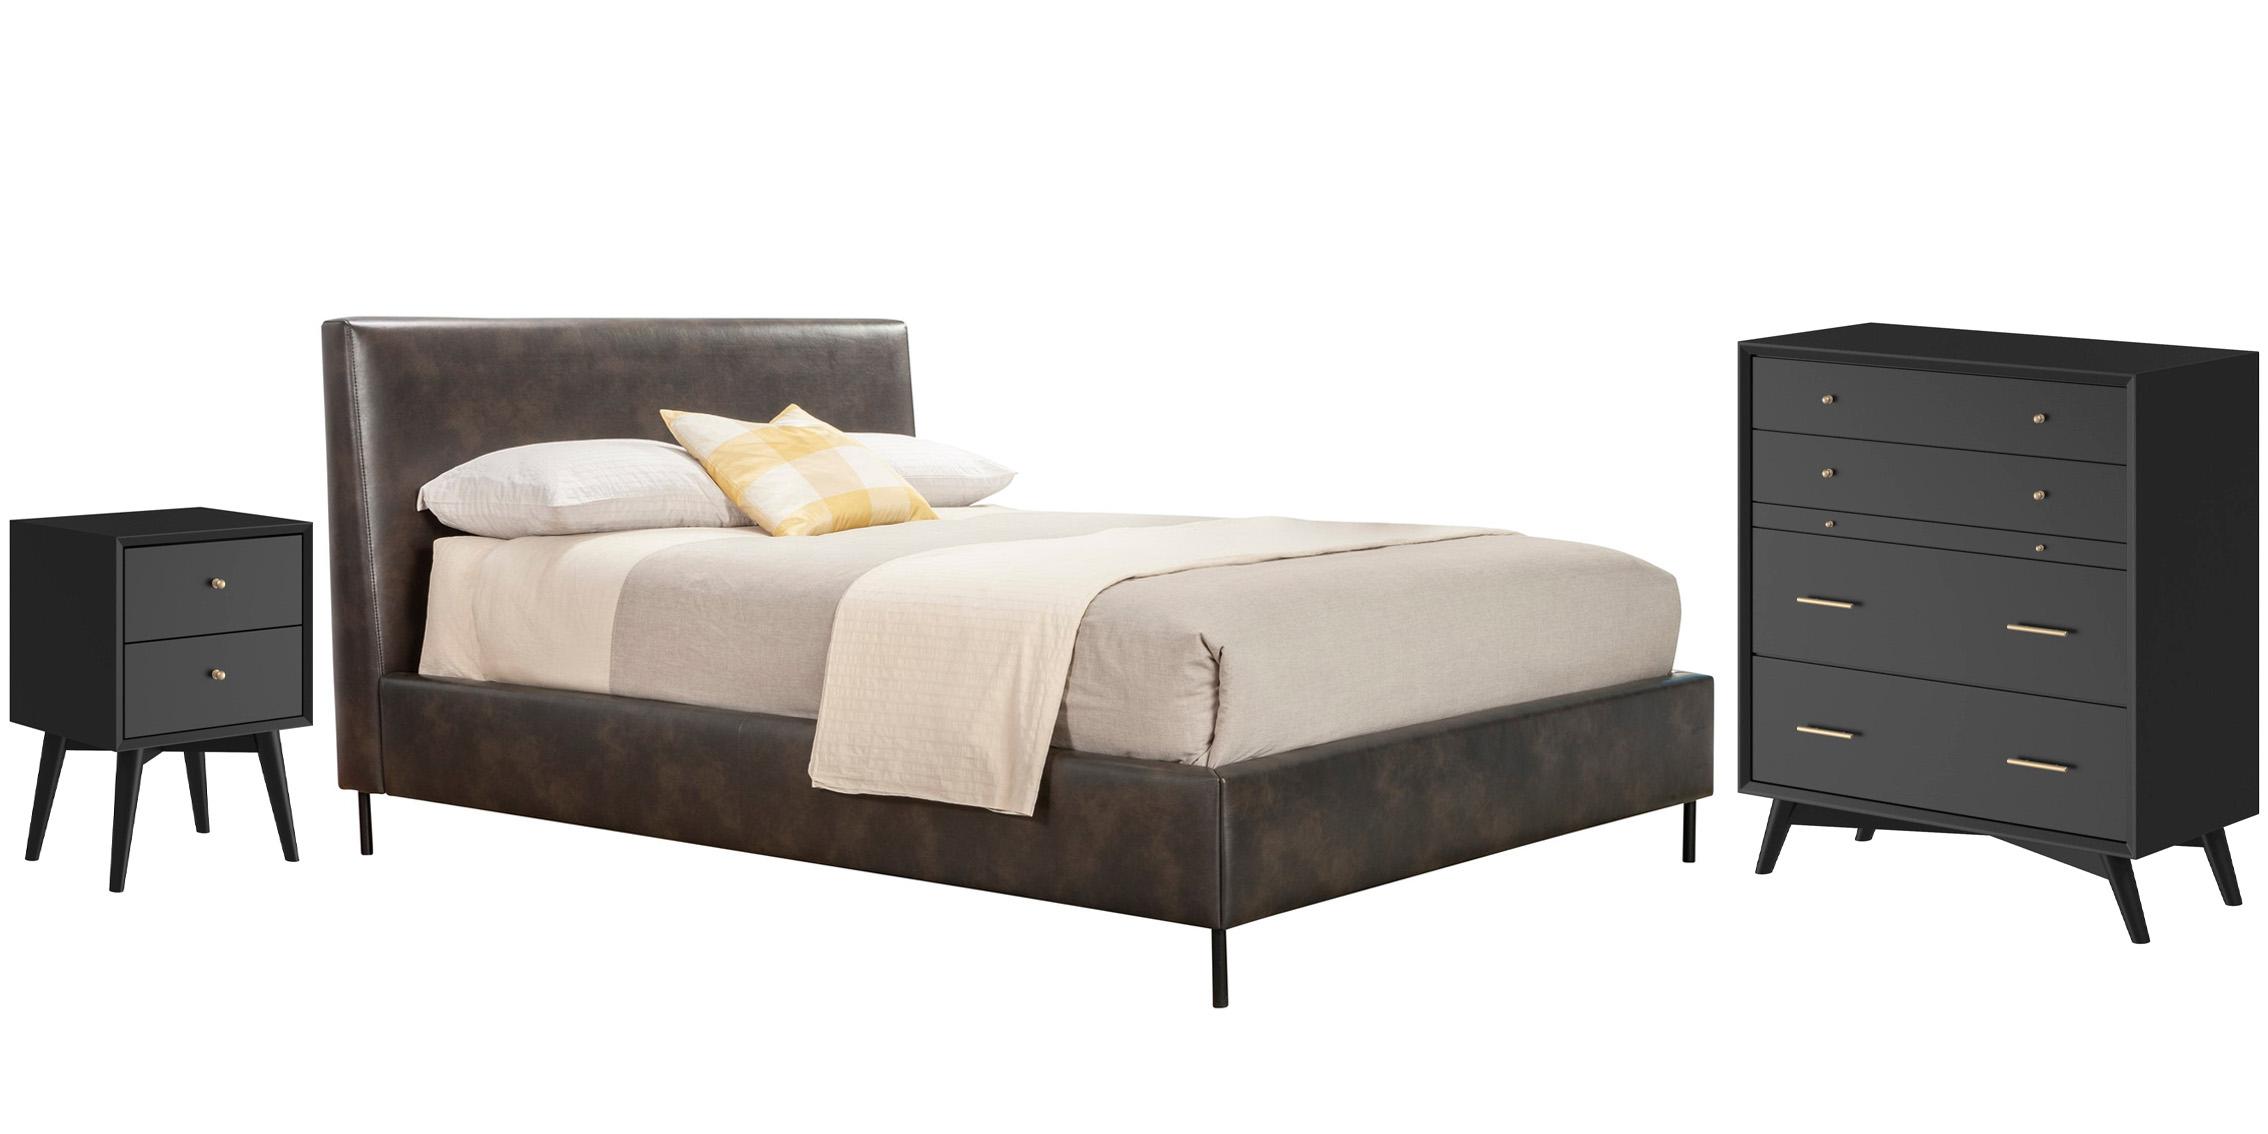 Modern Platform Bedroom Set SOPHIA / FLYNN 6902Q-GRY-Set-3-BLK in Gray, Black Faux Leather